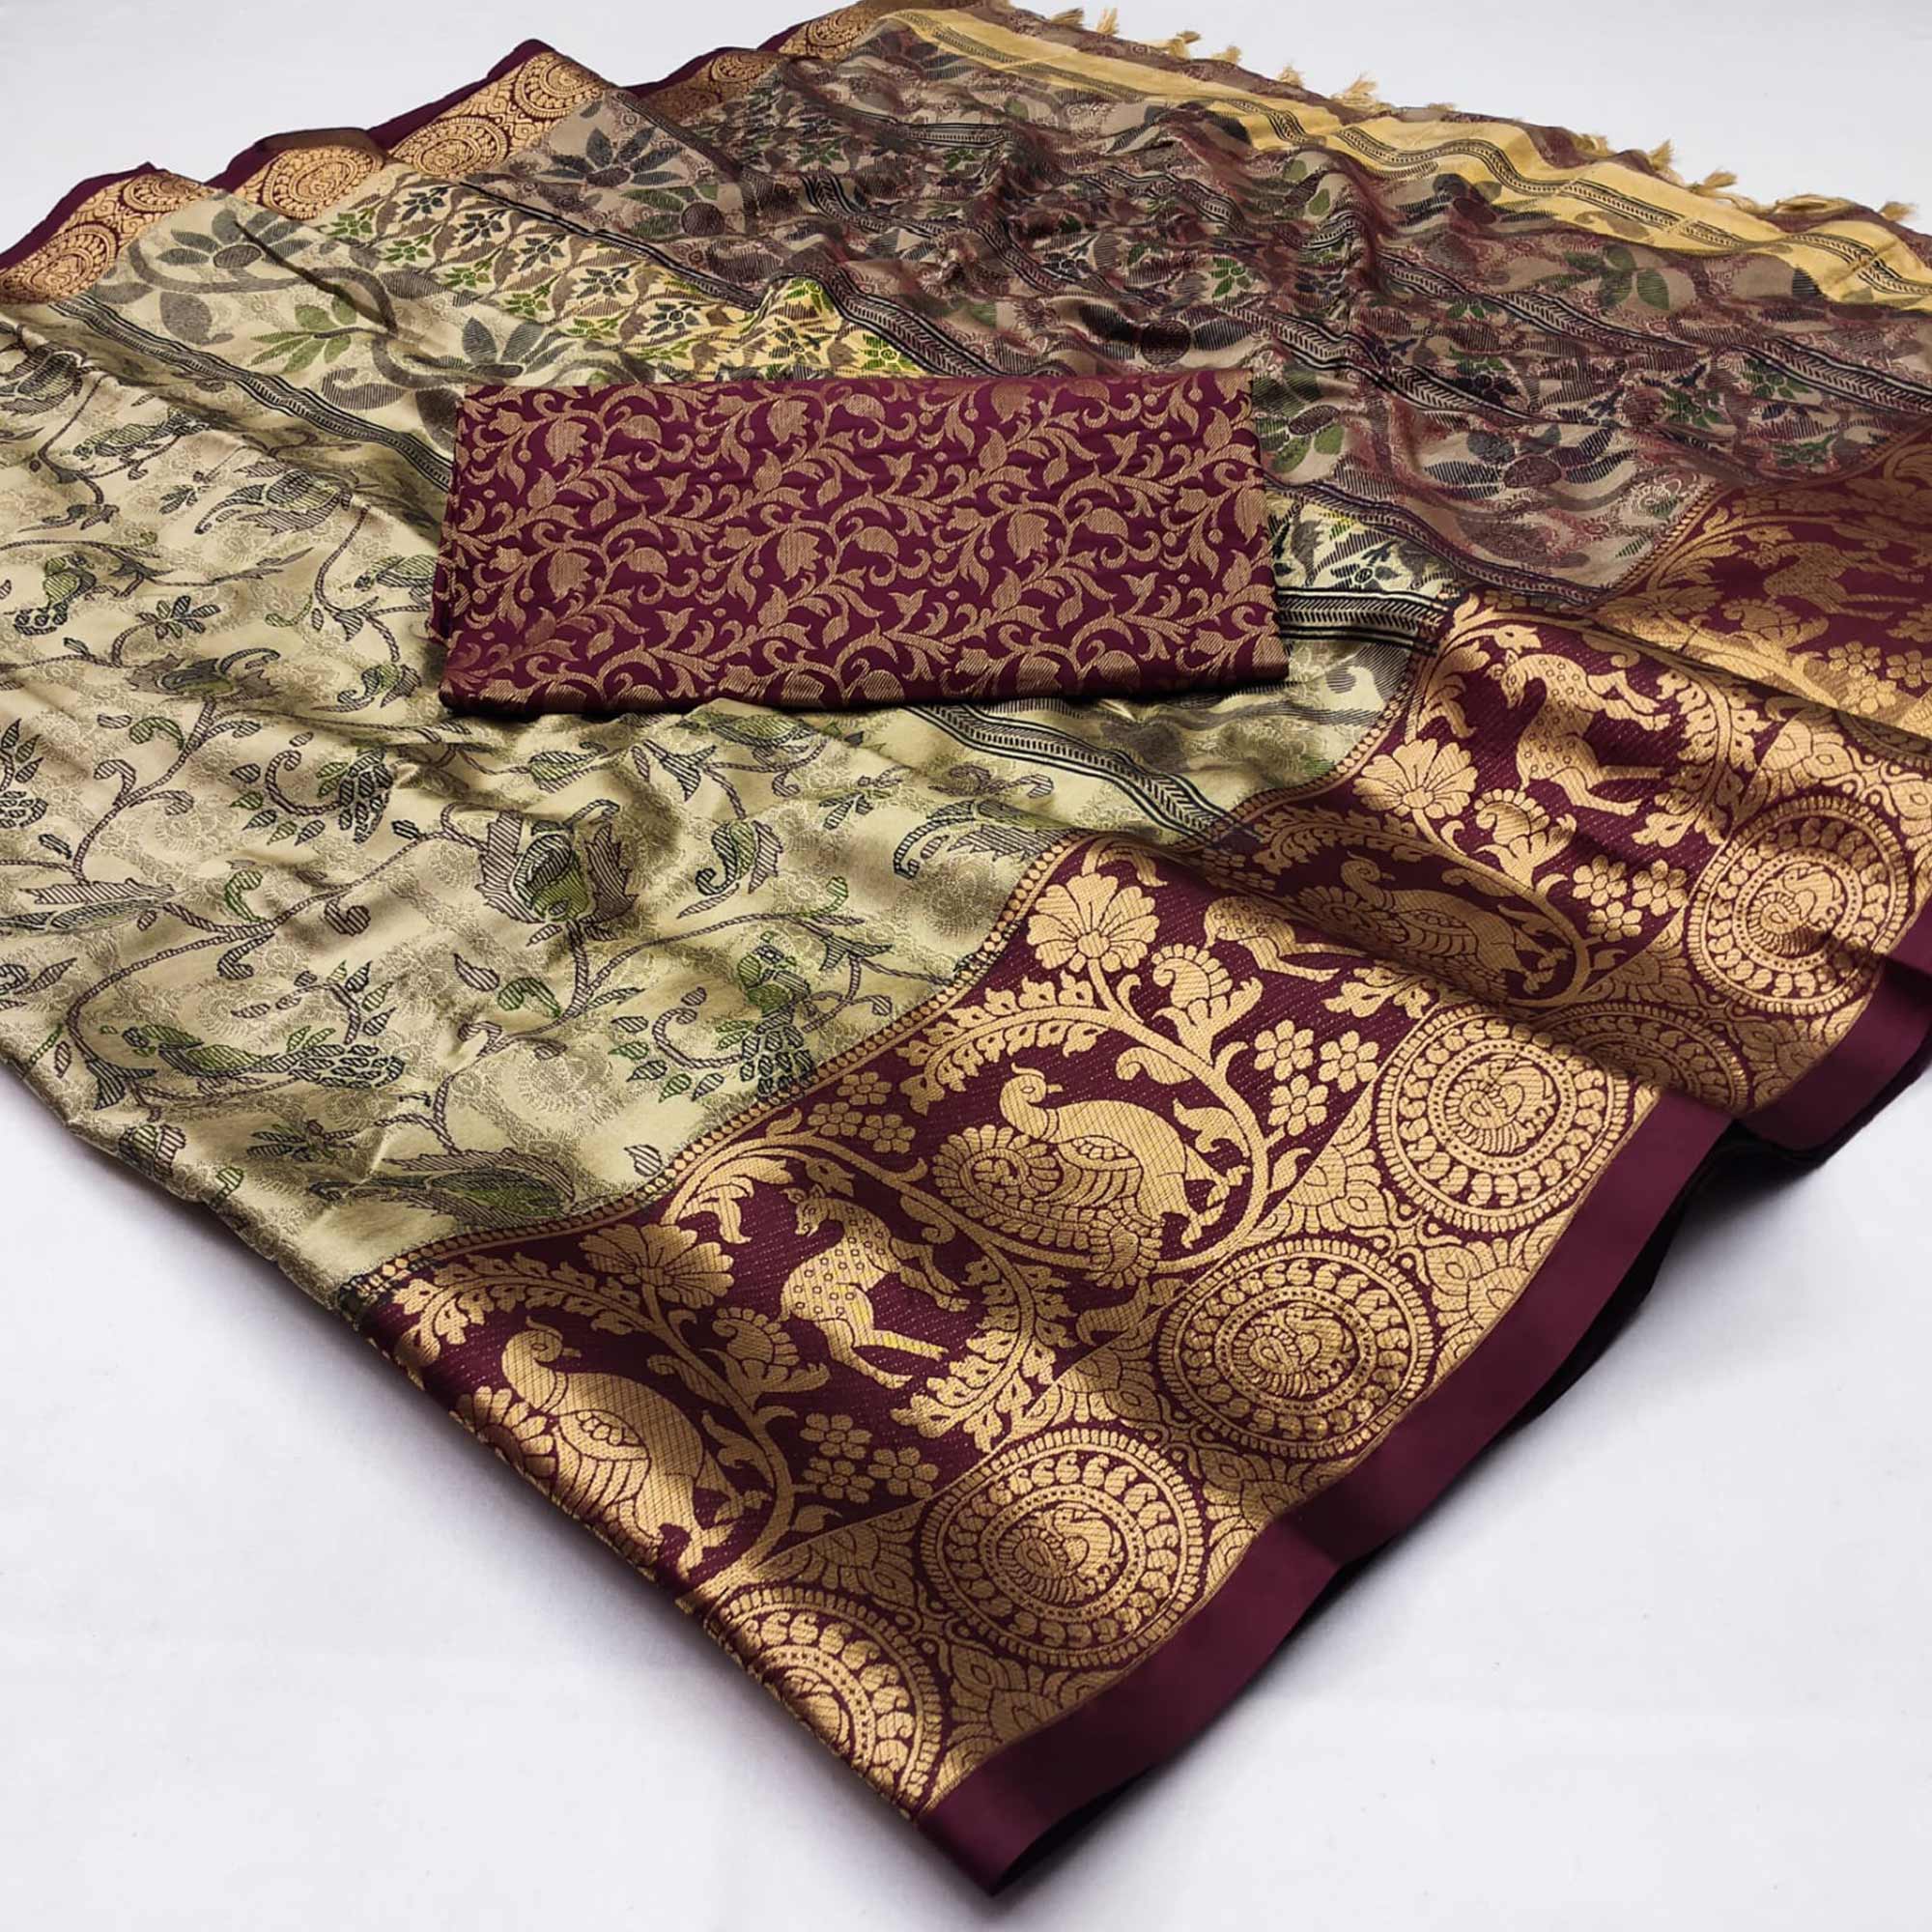 Chikoo Printed With Woven Border Cotton Silk Saree